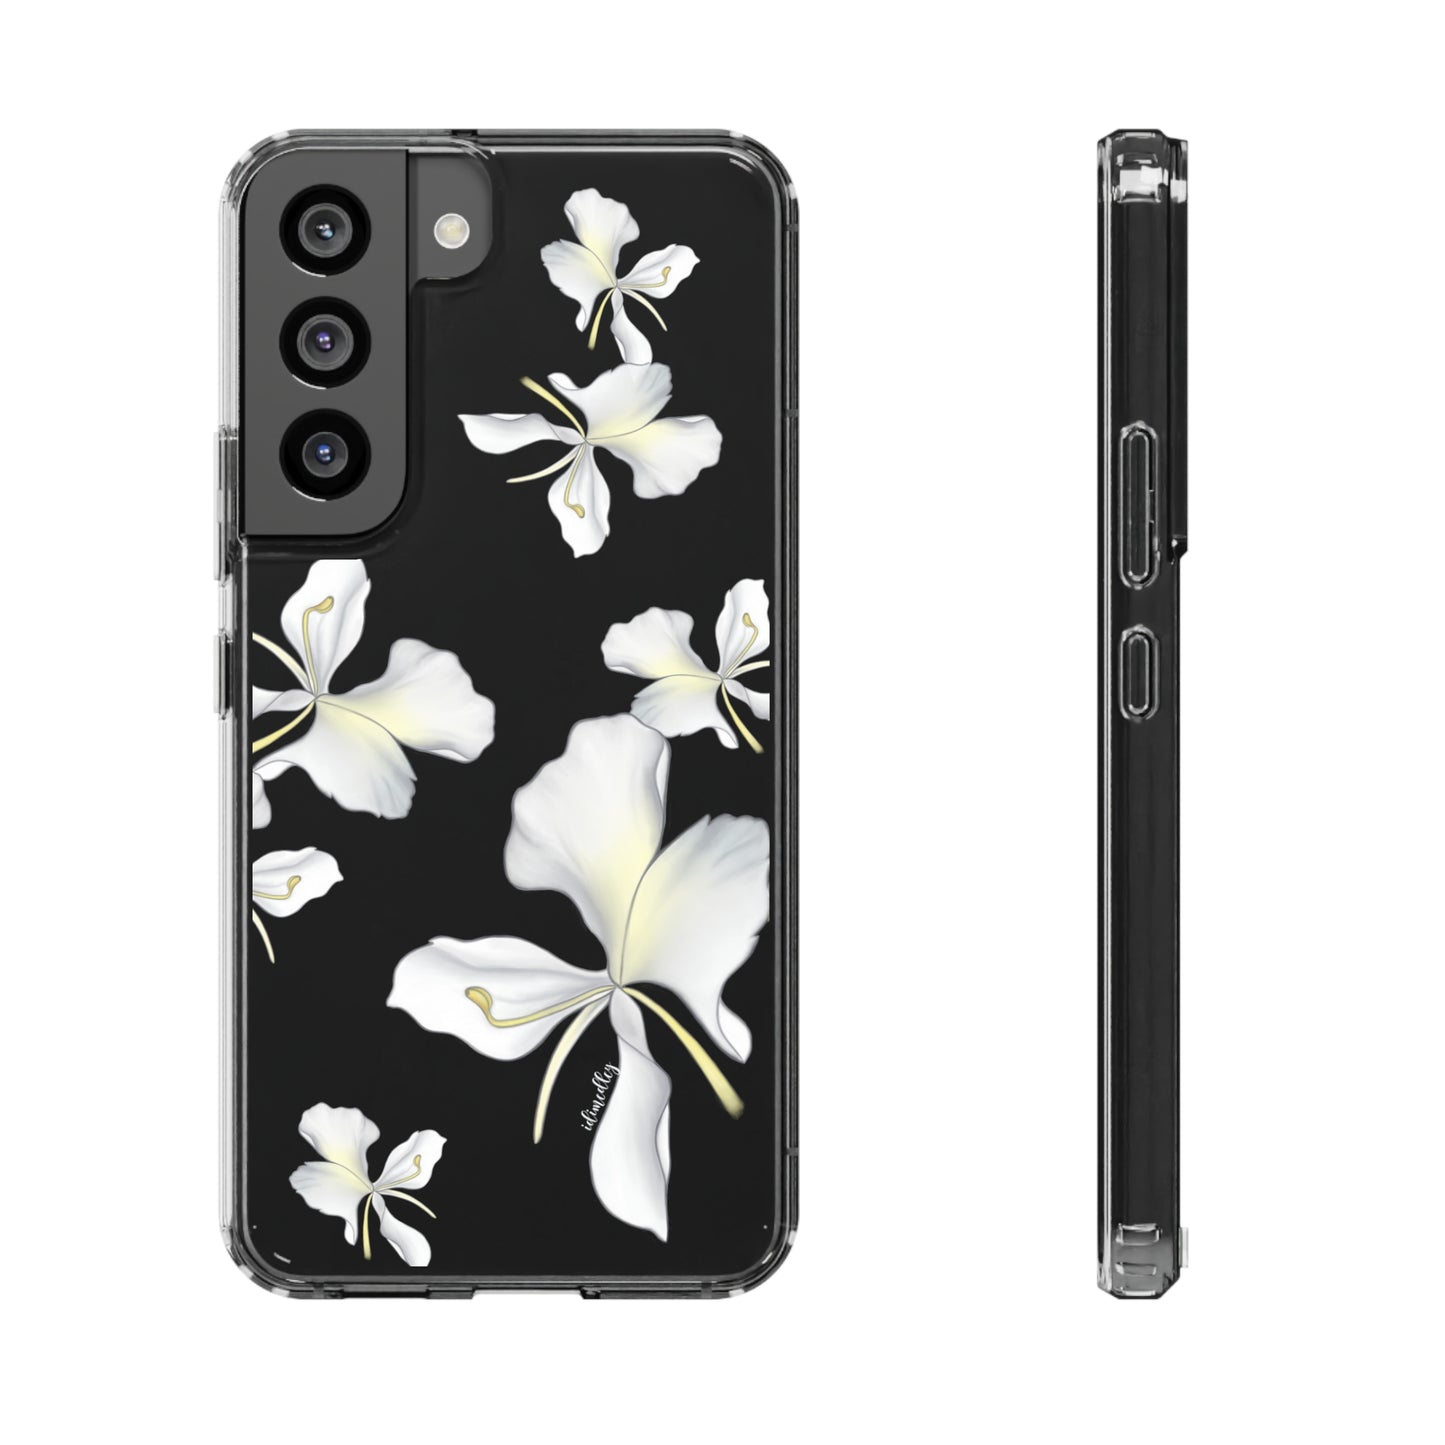 Idimedley white Hawaiian flower Samsung Galaxy phone case. 